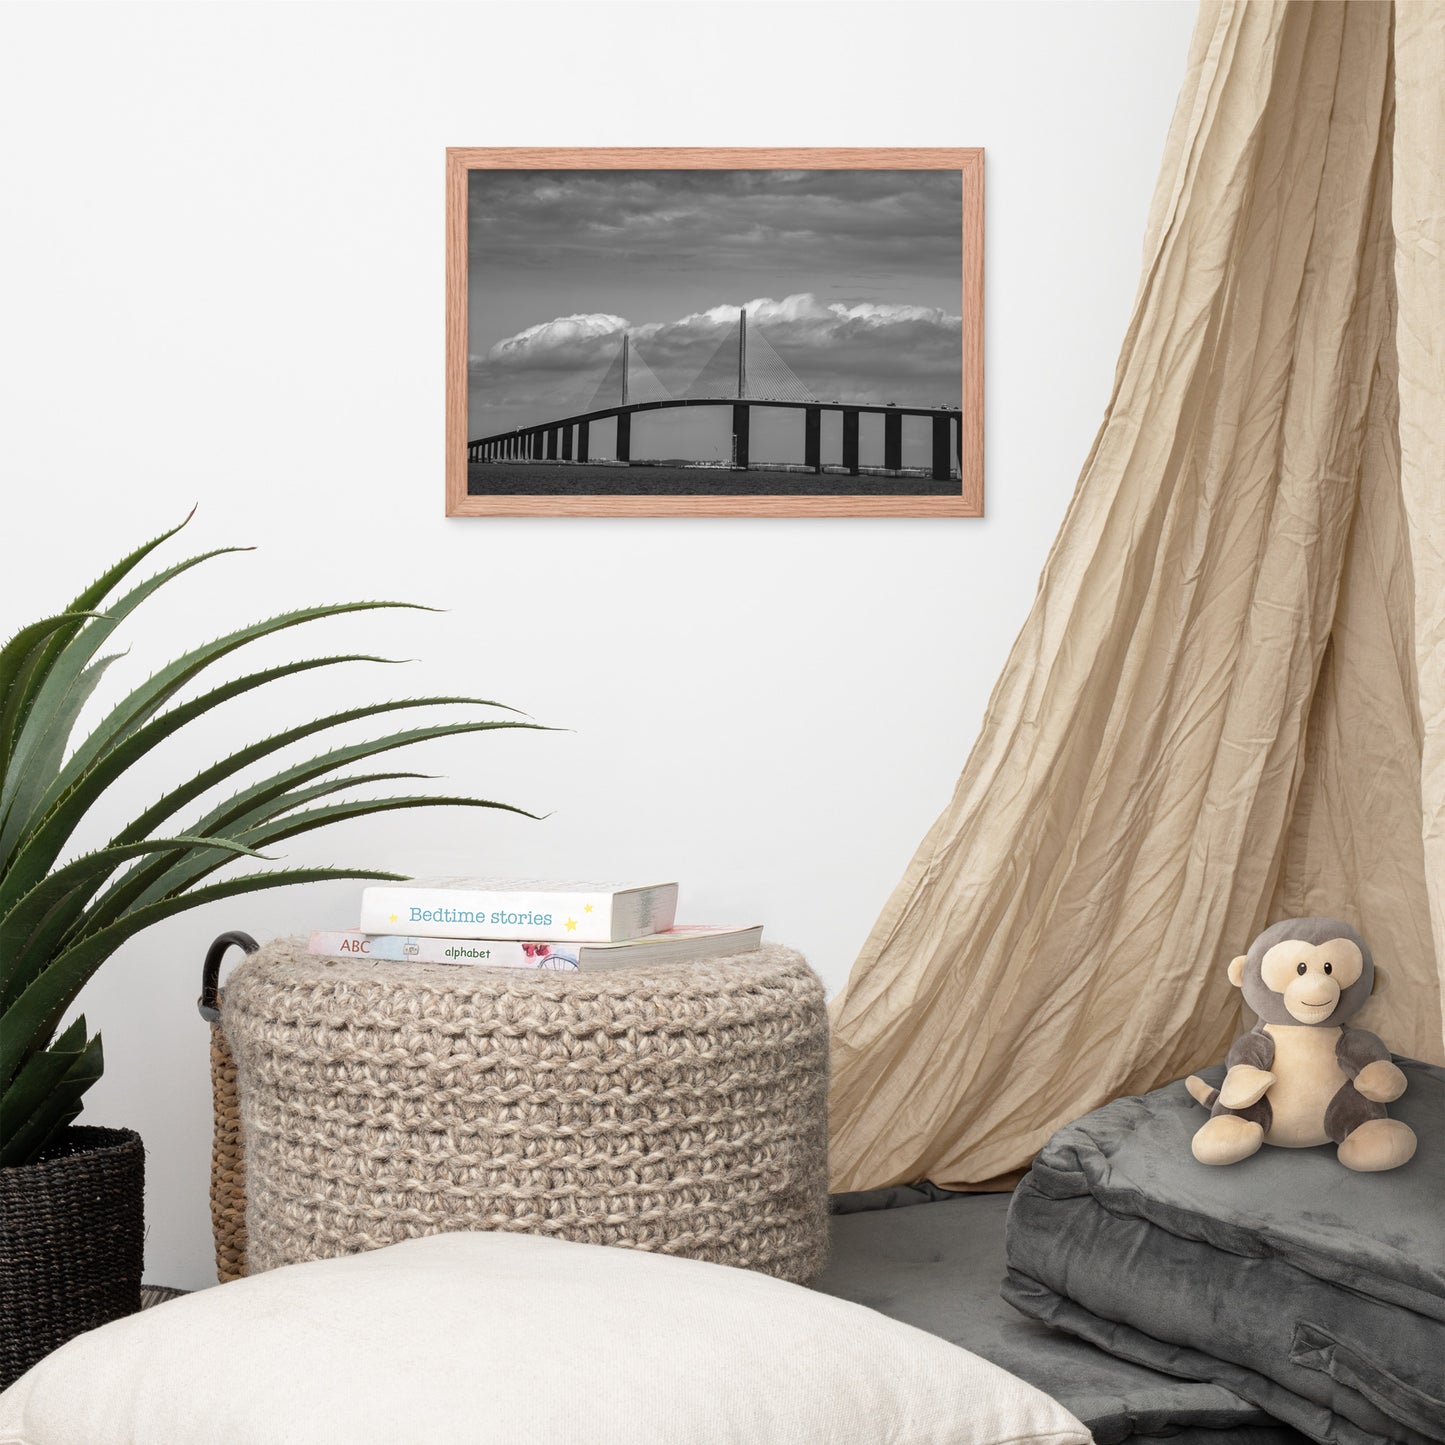 Skyway Bridge Black and White Coastal Landscape Framed Photo Paper Wall Art Prints